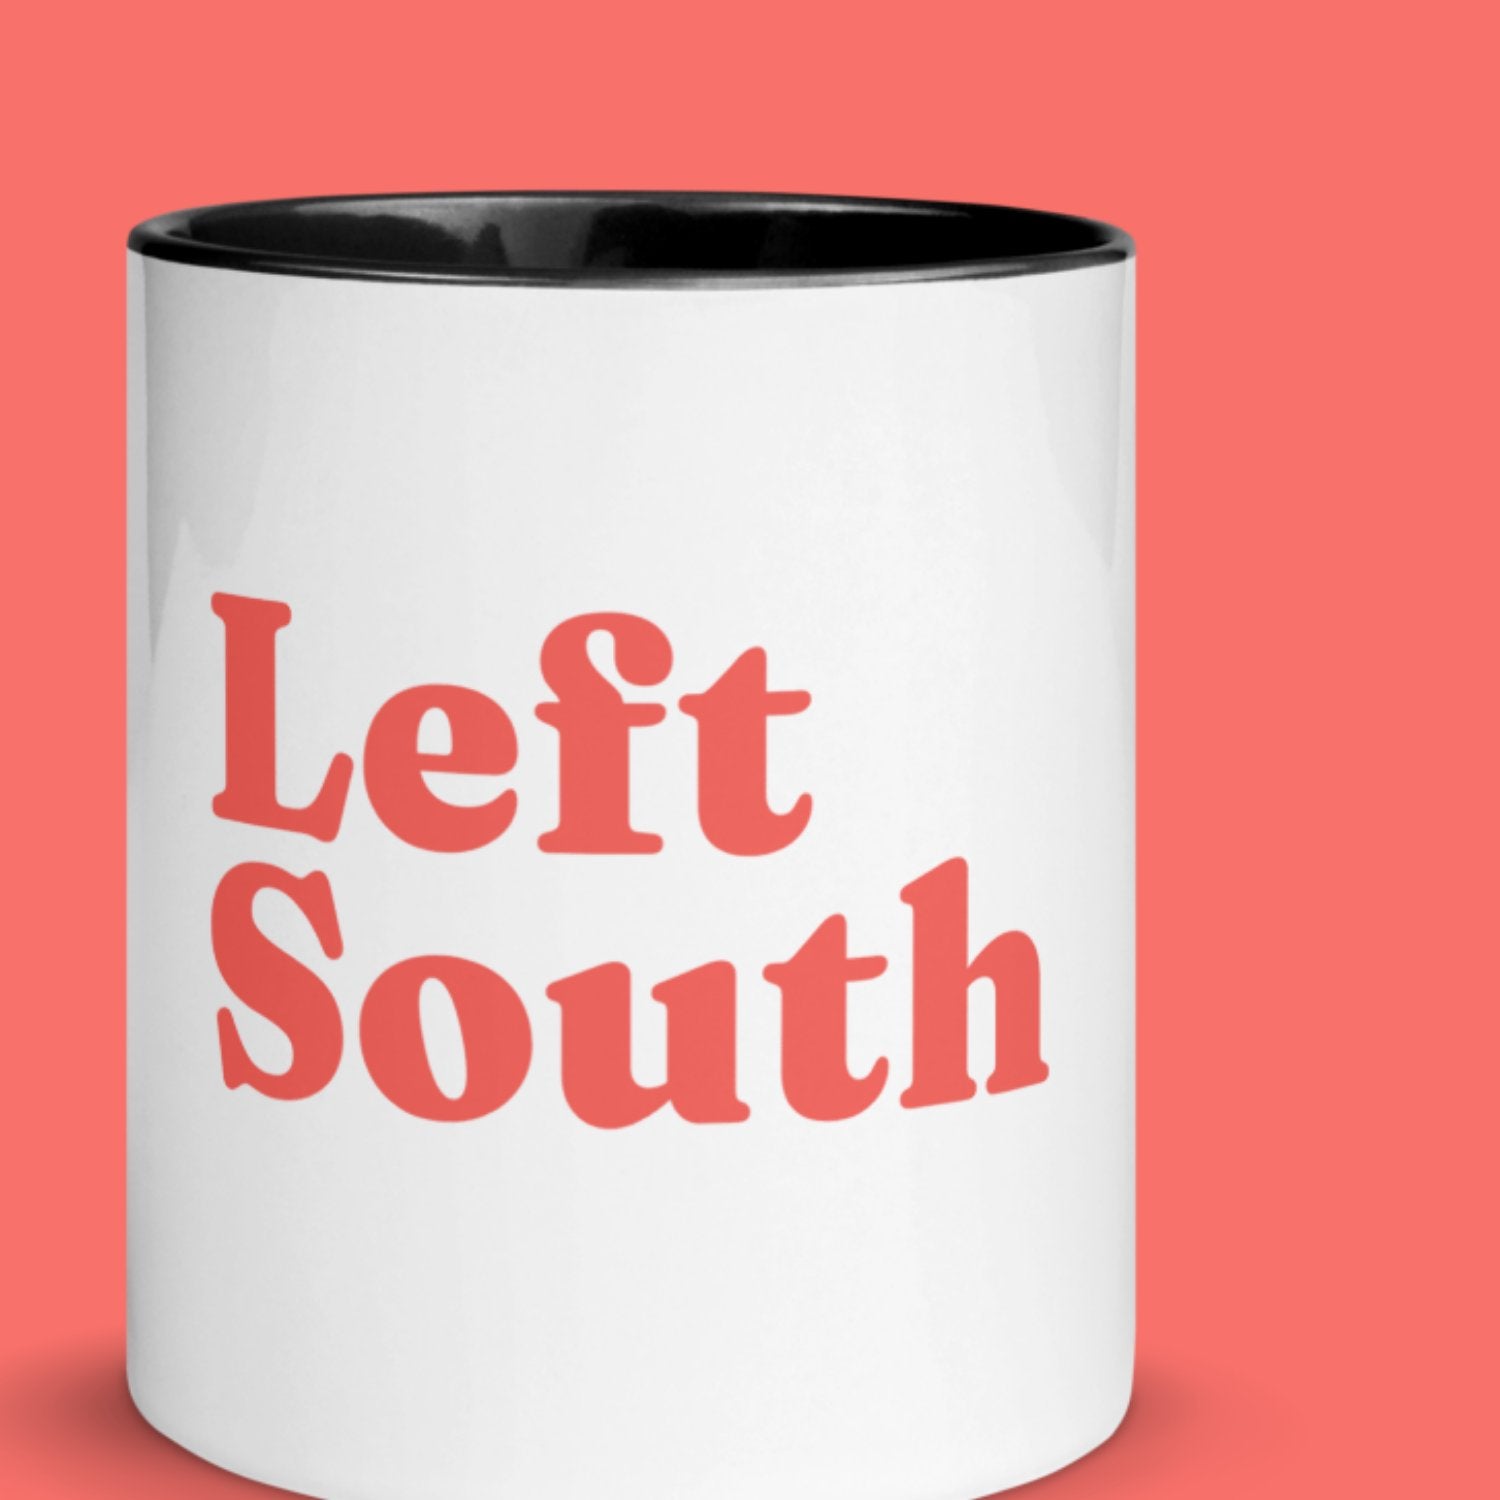 Left South